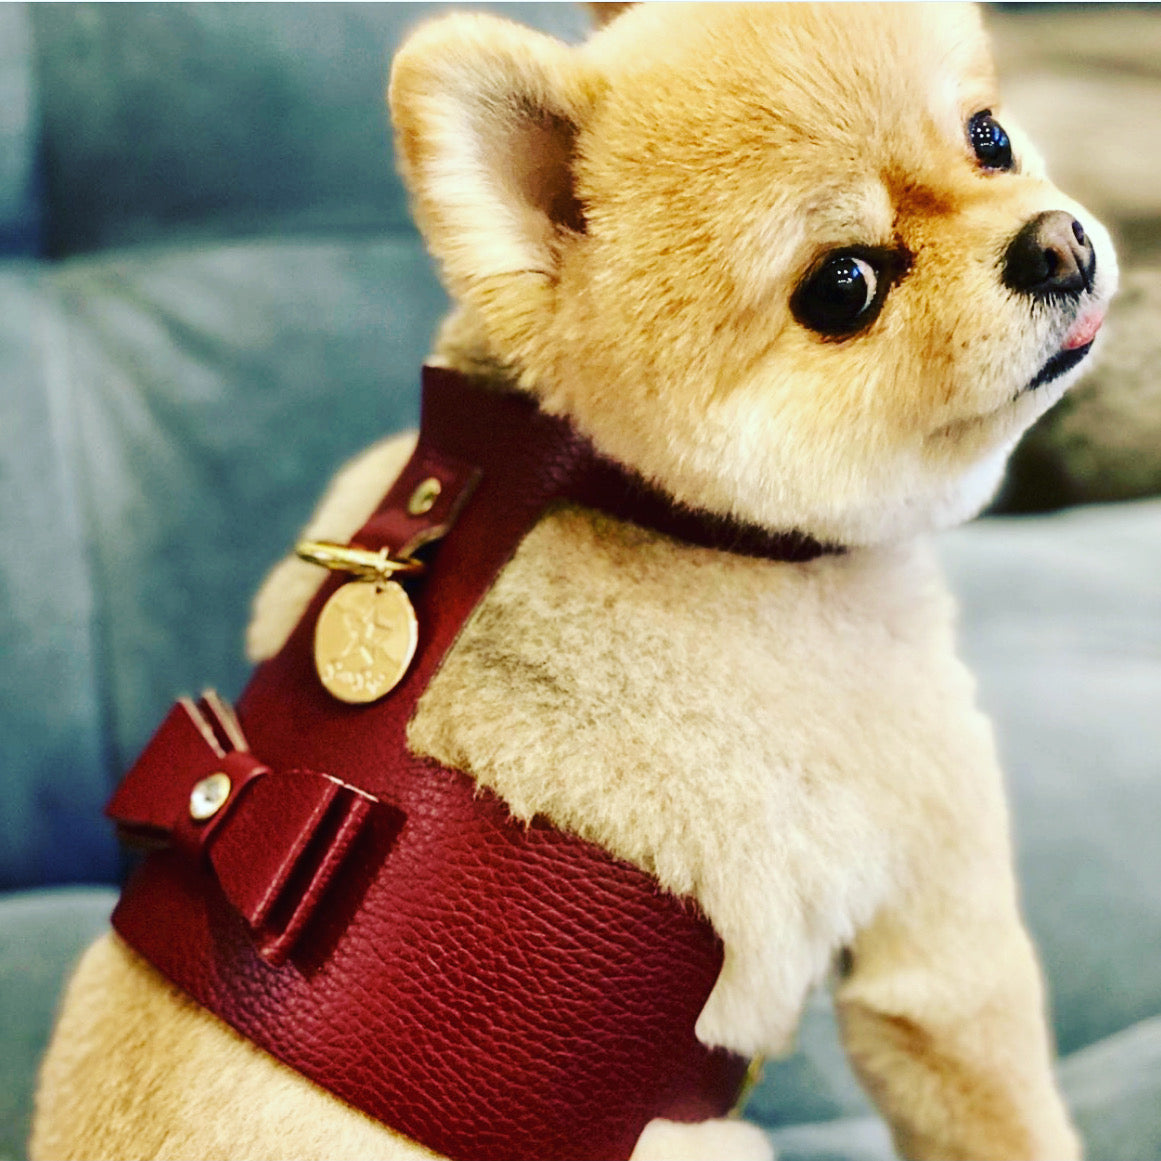 Poisepup – Luxury Pet Dog Harness – Soft Premium Italian Leather W